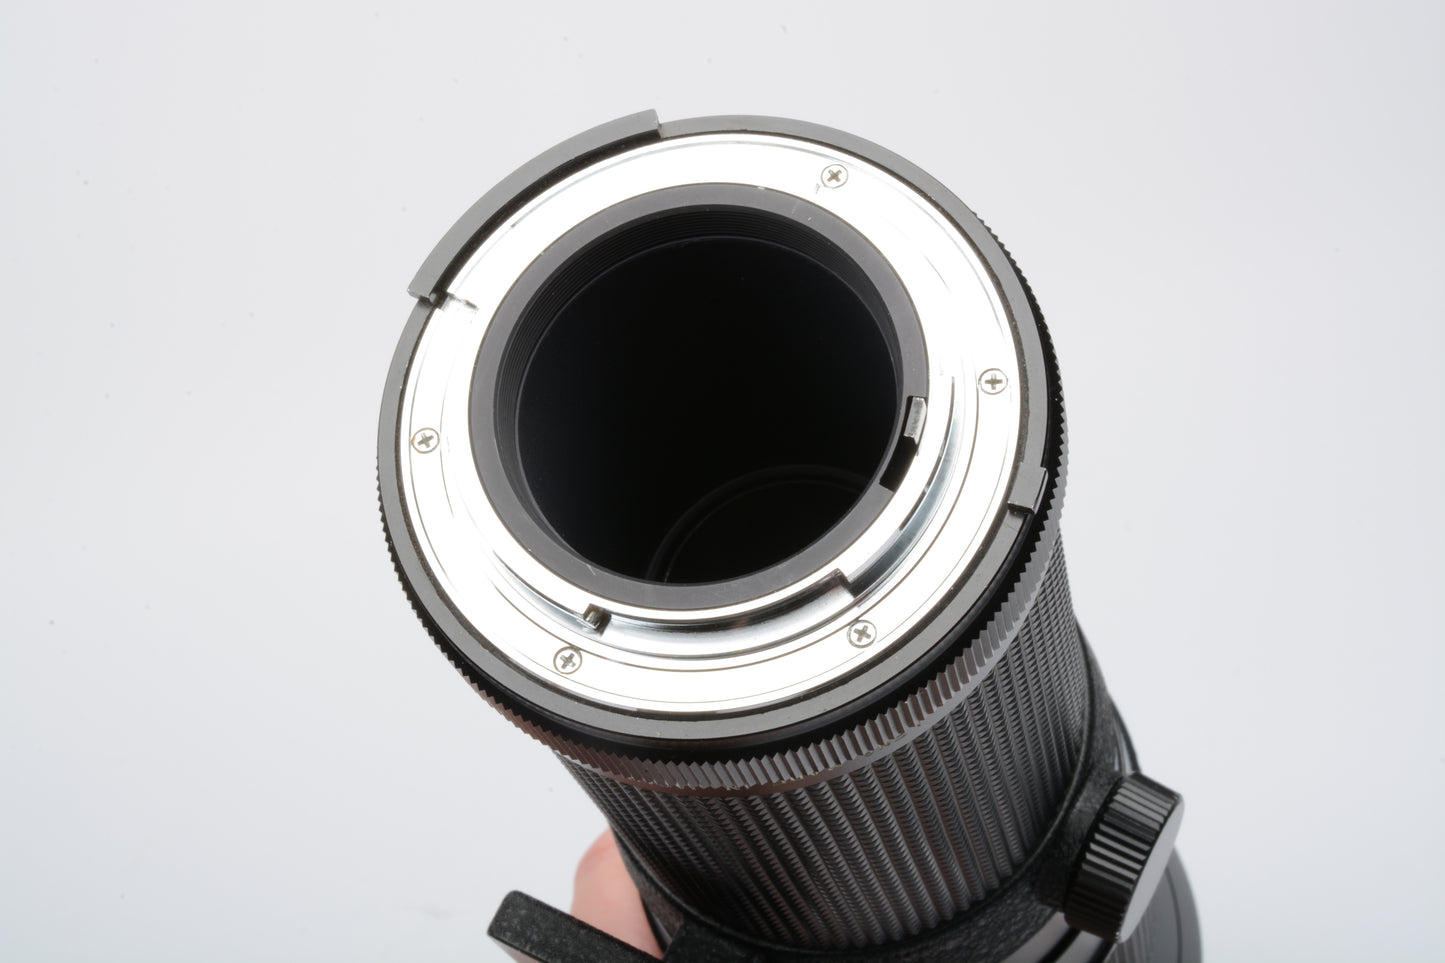 Vivitar 400mm f5.6 telephoto lens, Nikon AI mount, caps, case, tripod mount